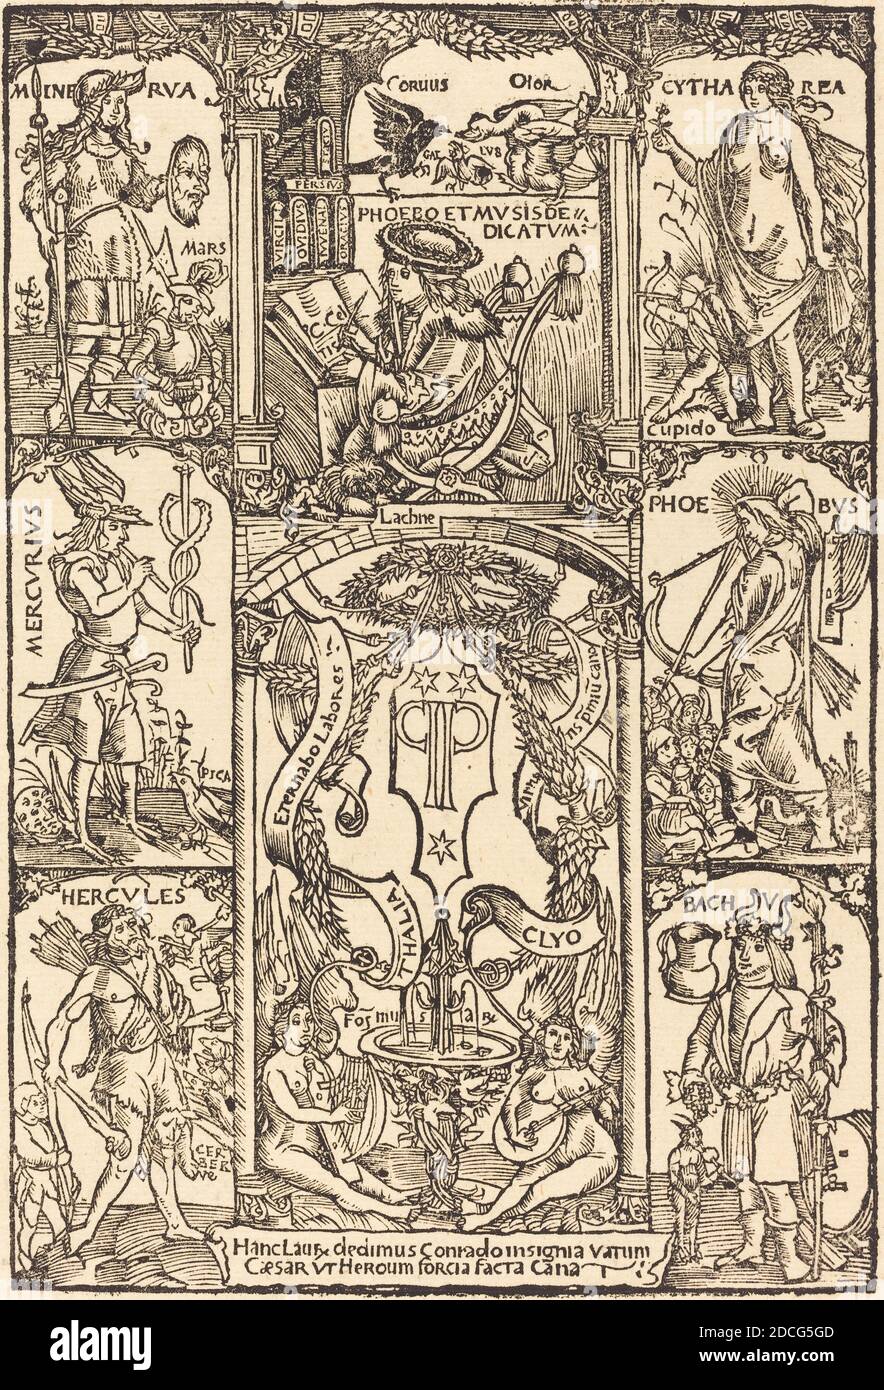 Hans Süss von Kulmbach, (artist), German, c. 1485 - 1522, Celtes Surrounded by Greek and Roman Gods, Conrad Celtis, 'Quarter Libri Amorum', (series), published 1502, woodcut Stock Photo